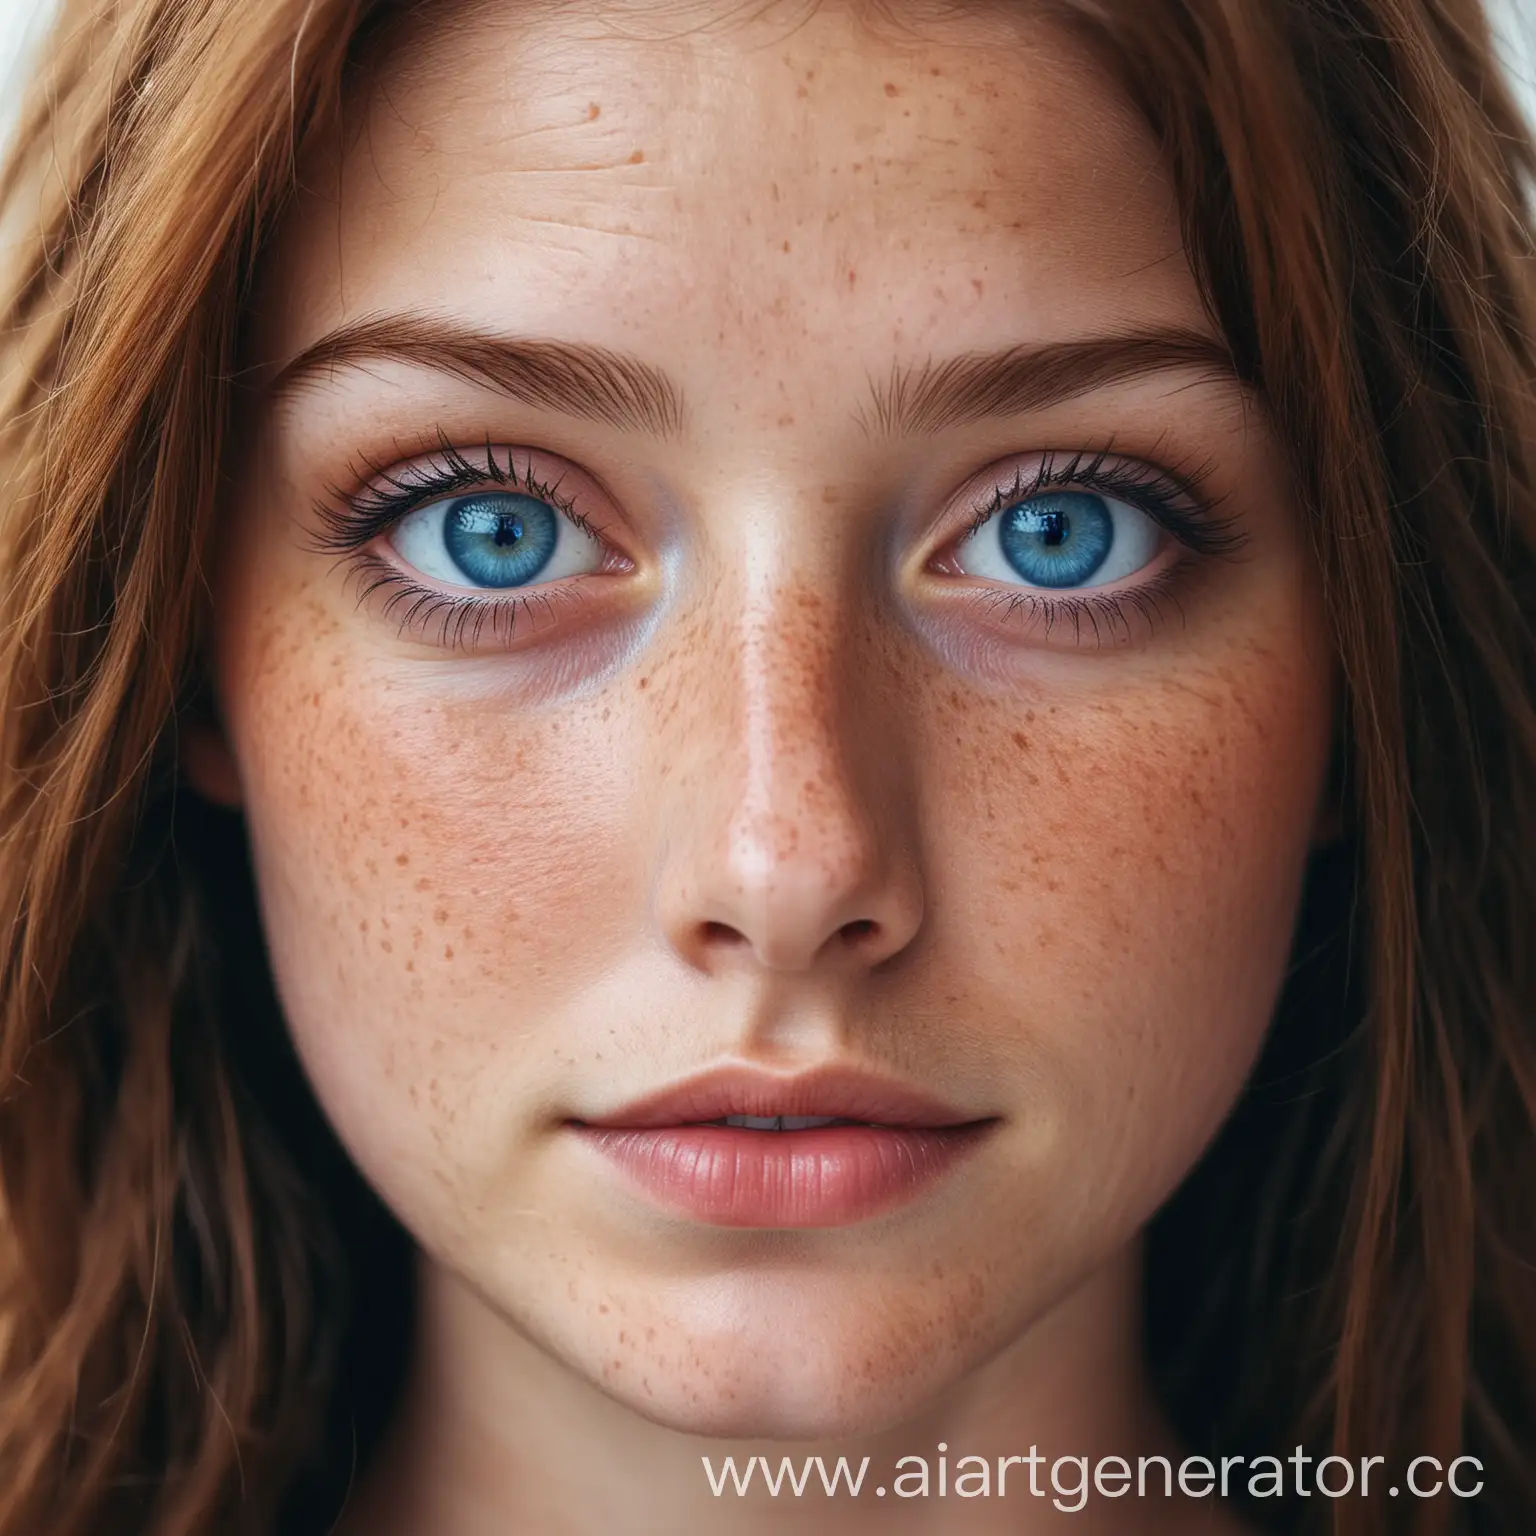 девушка 28 лет, голубые глаза, веснушки на лице